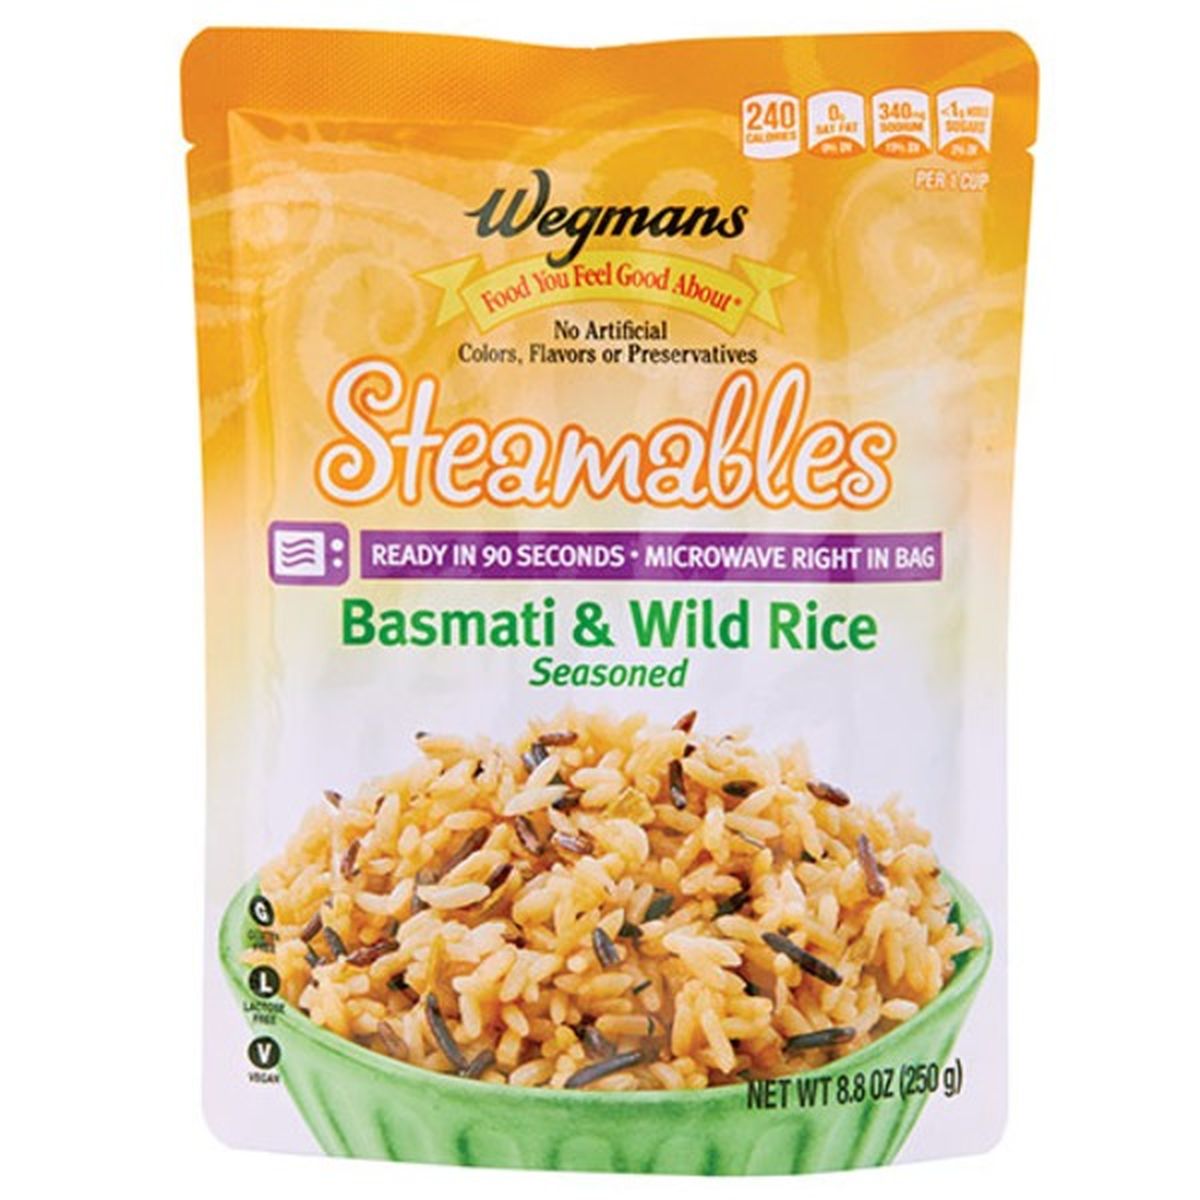 Calories in Wegmans Instant Basmati & Wild Rice